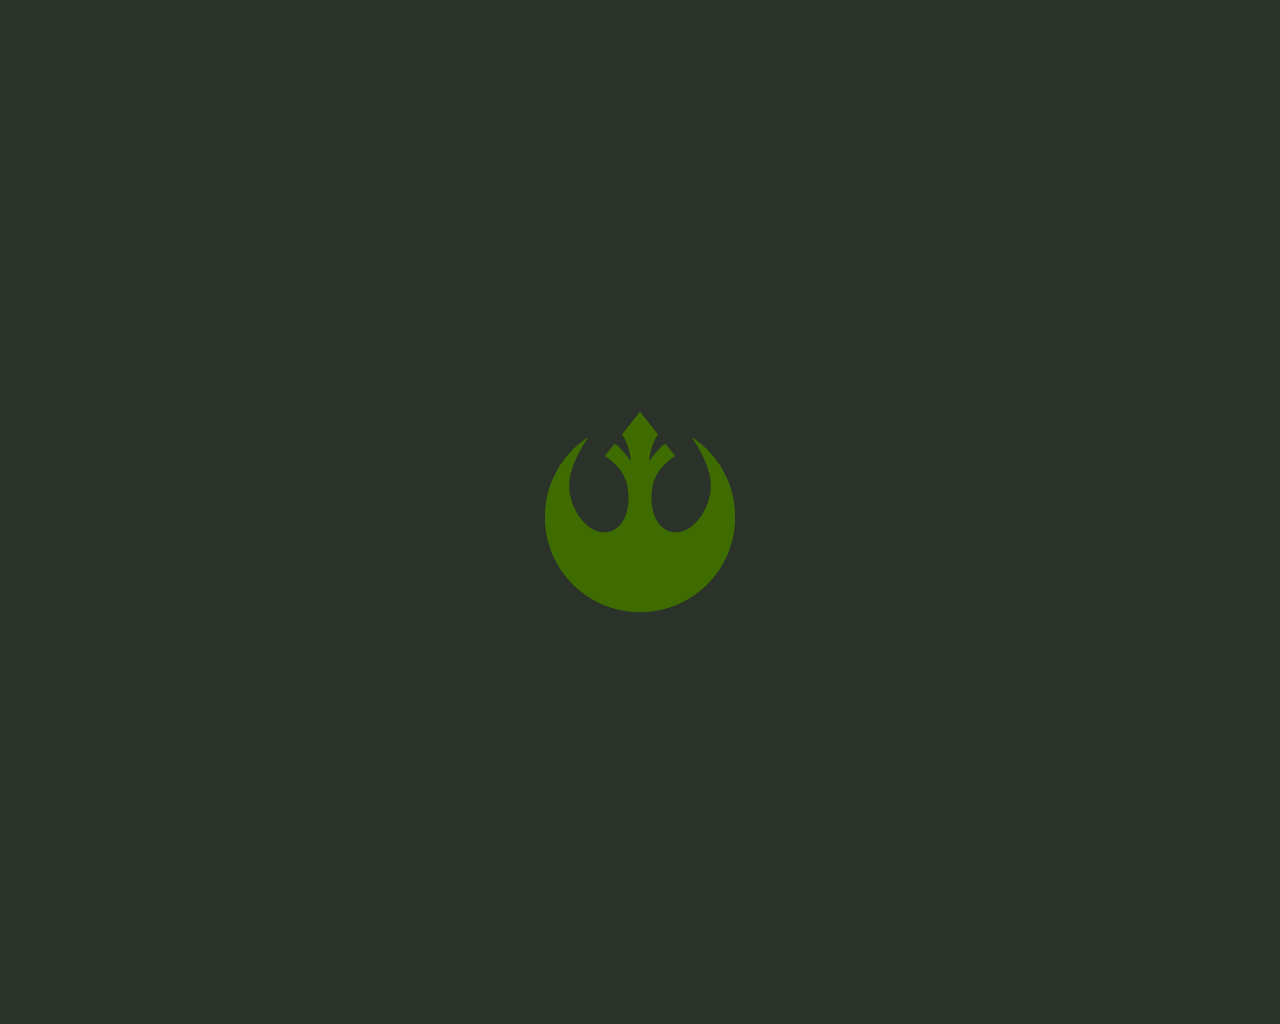 star wars rebellion logo wallpaper